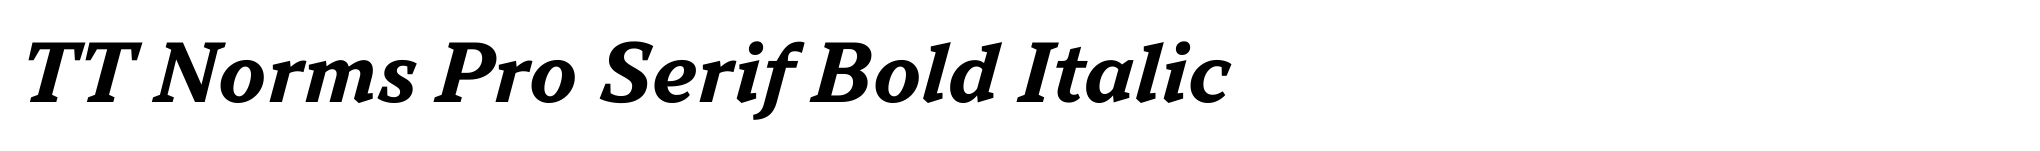 TT Norms Pro Serif Bold Italic image